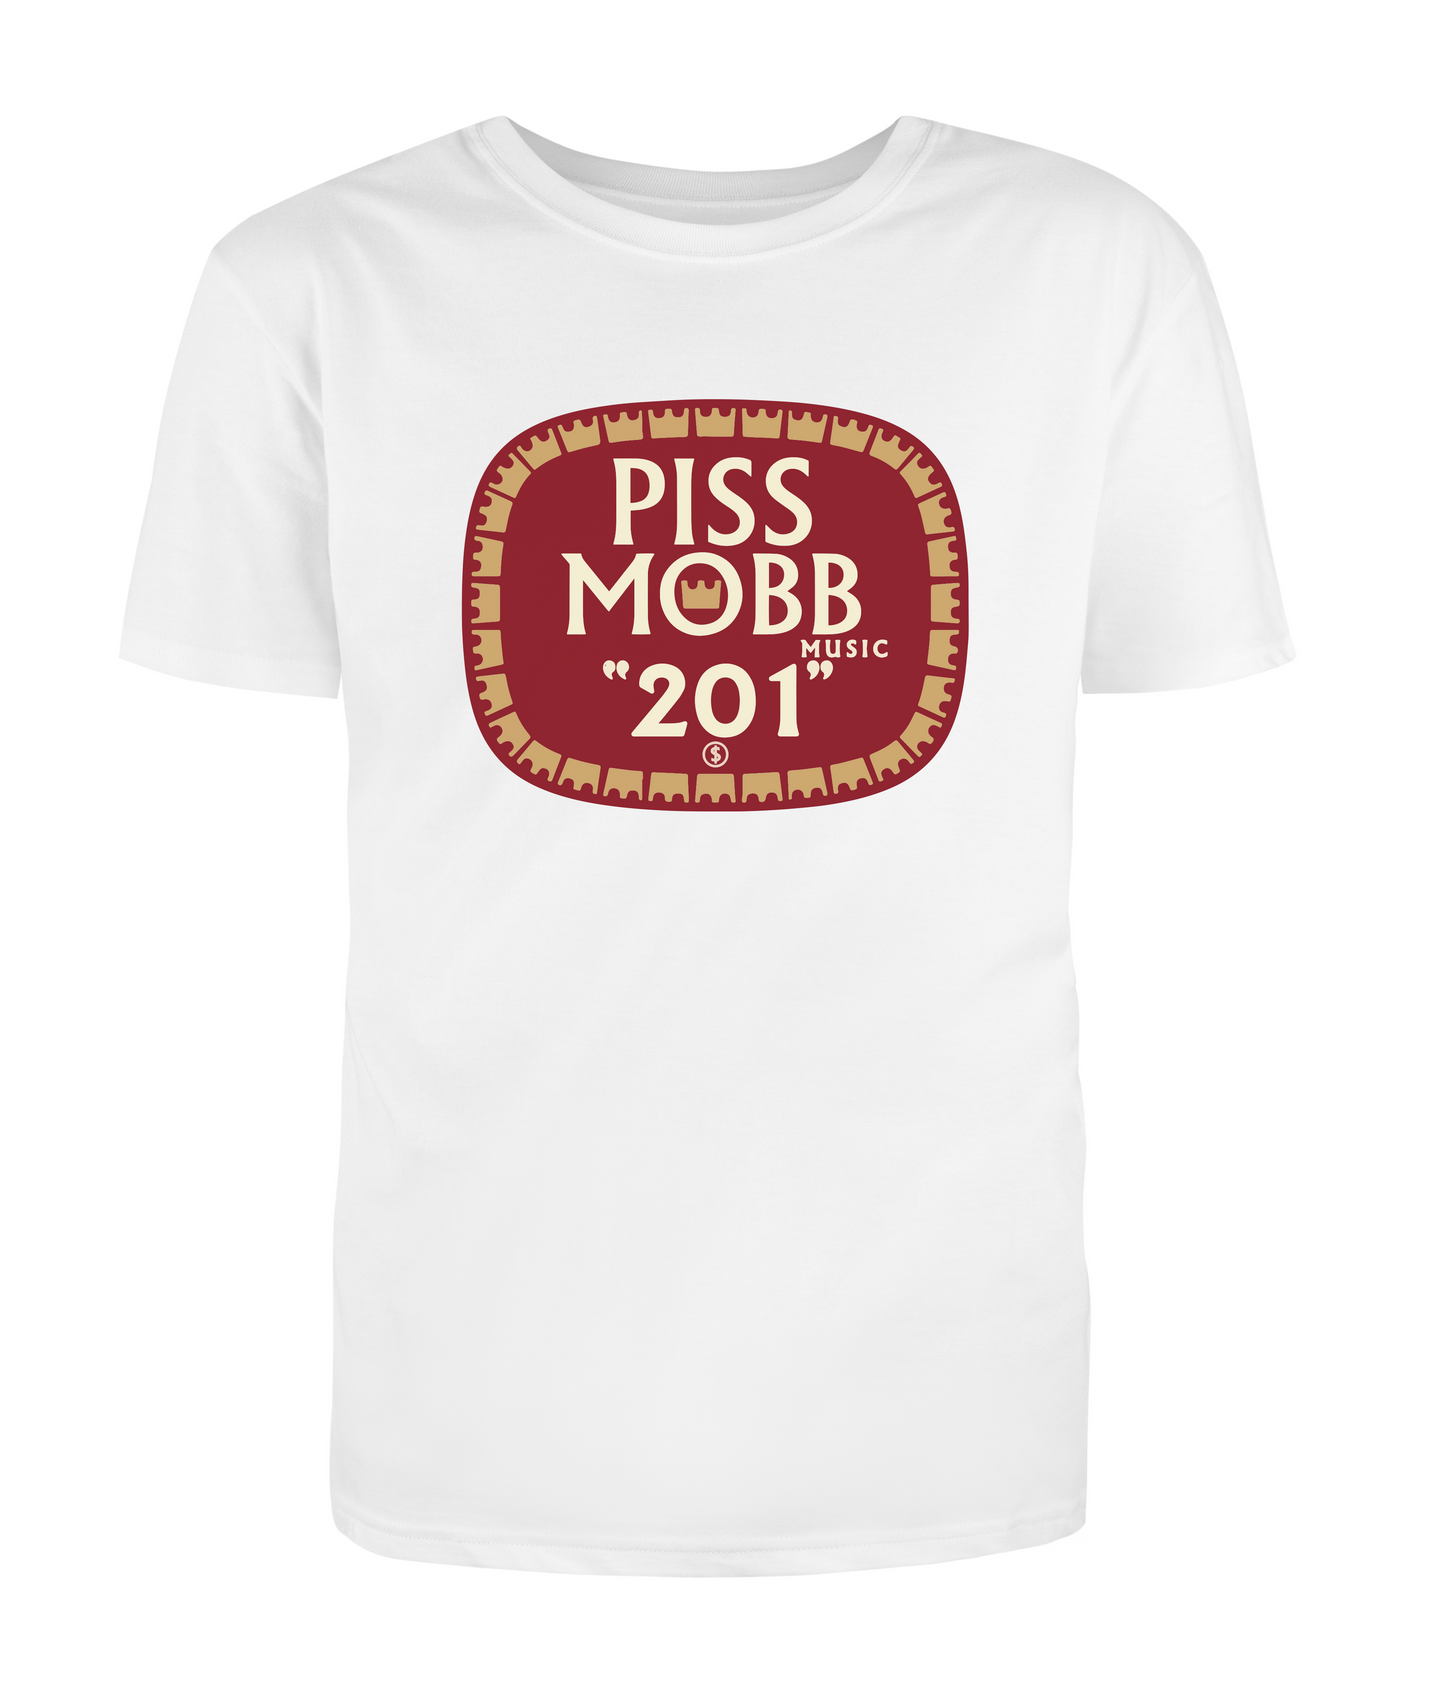 PI$$MOBB - Olde English White T-shirt